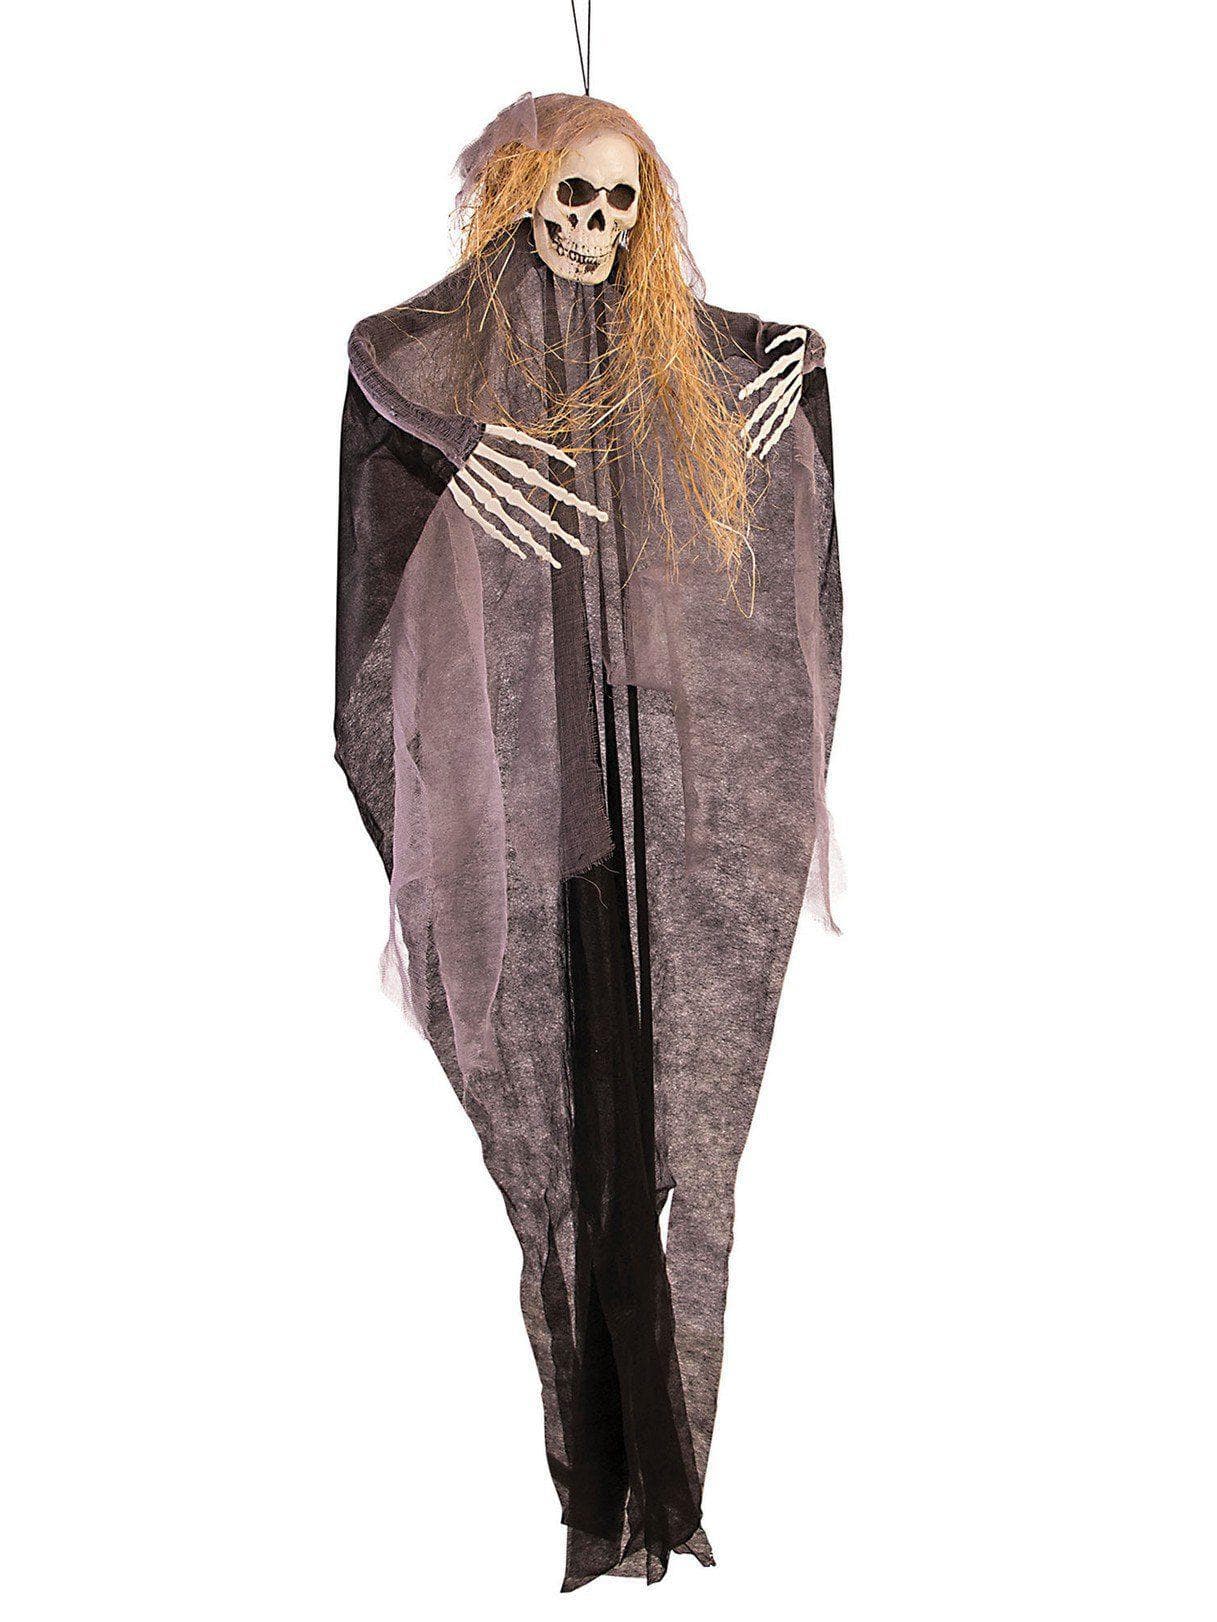 60" Skull Hanging Prop - costumes.com